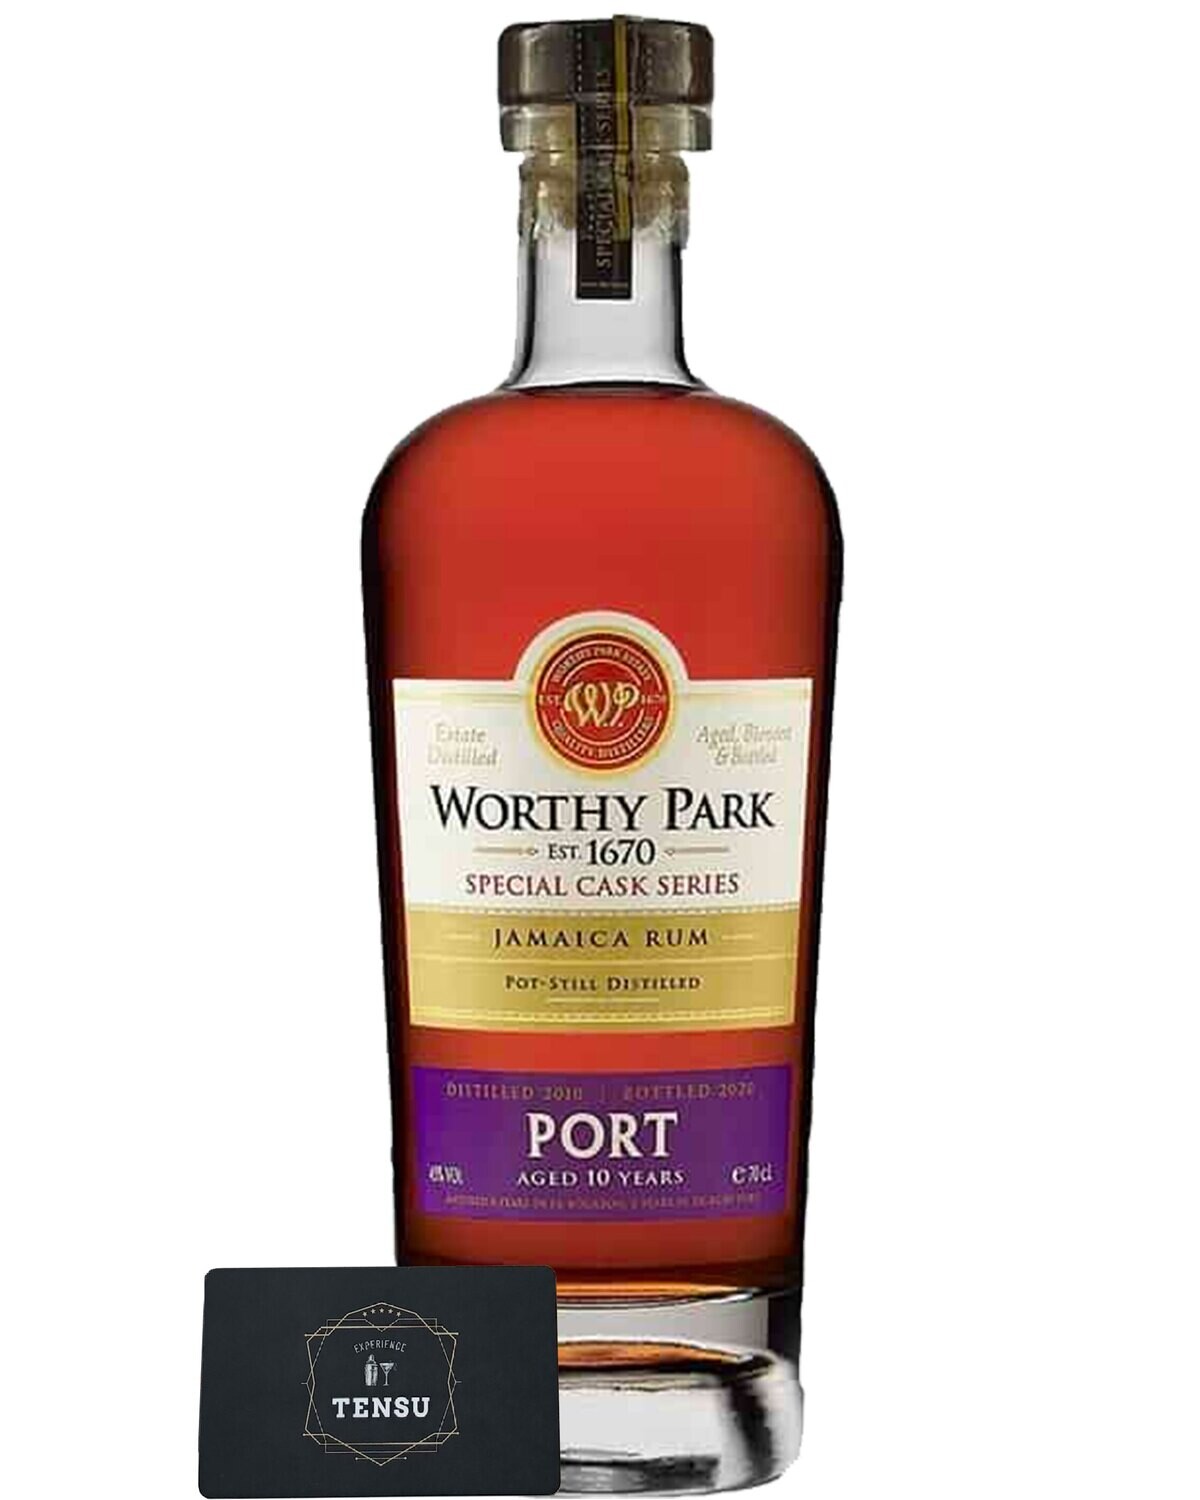 Worthy Park Special Cask Series (2010-2020) Port 45,0 "OB"